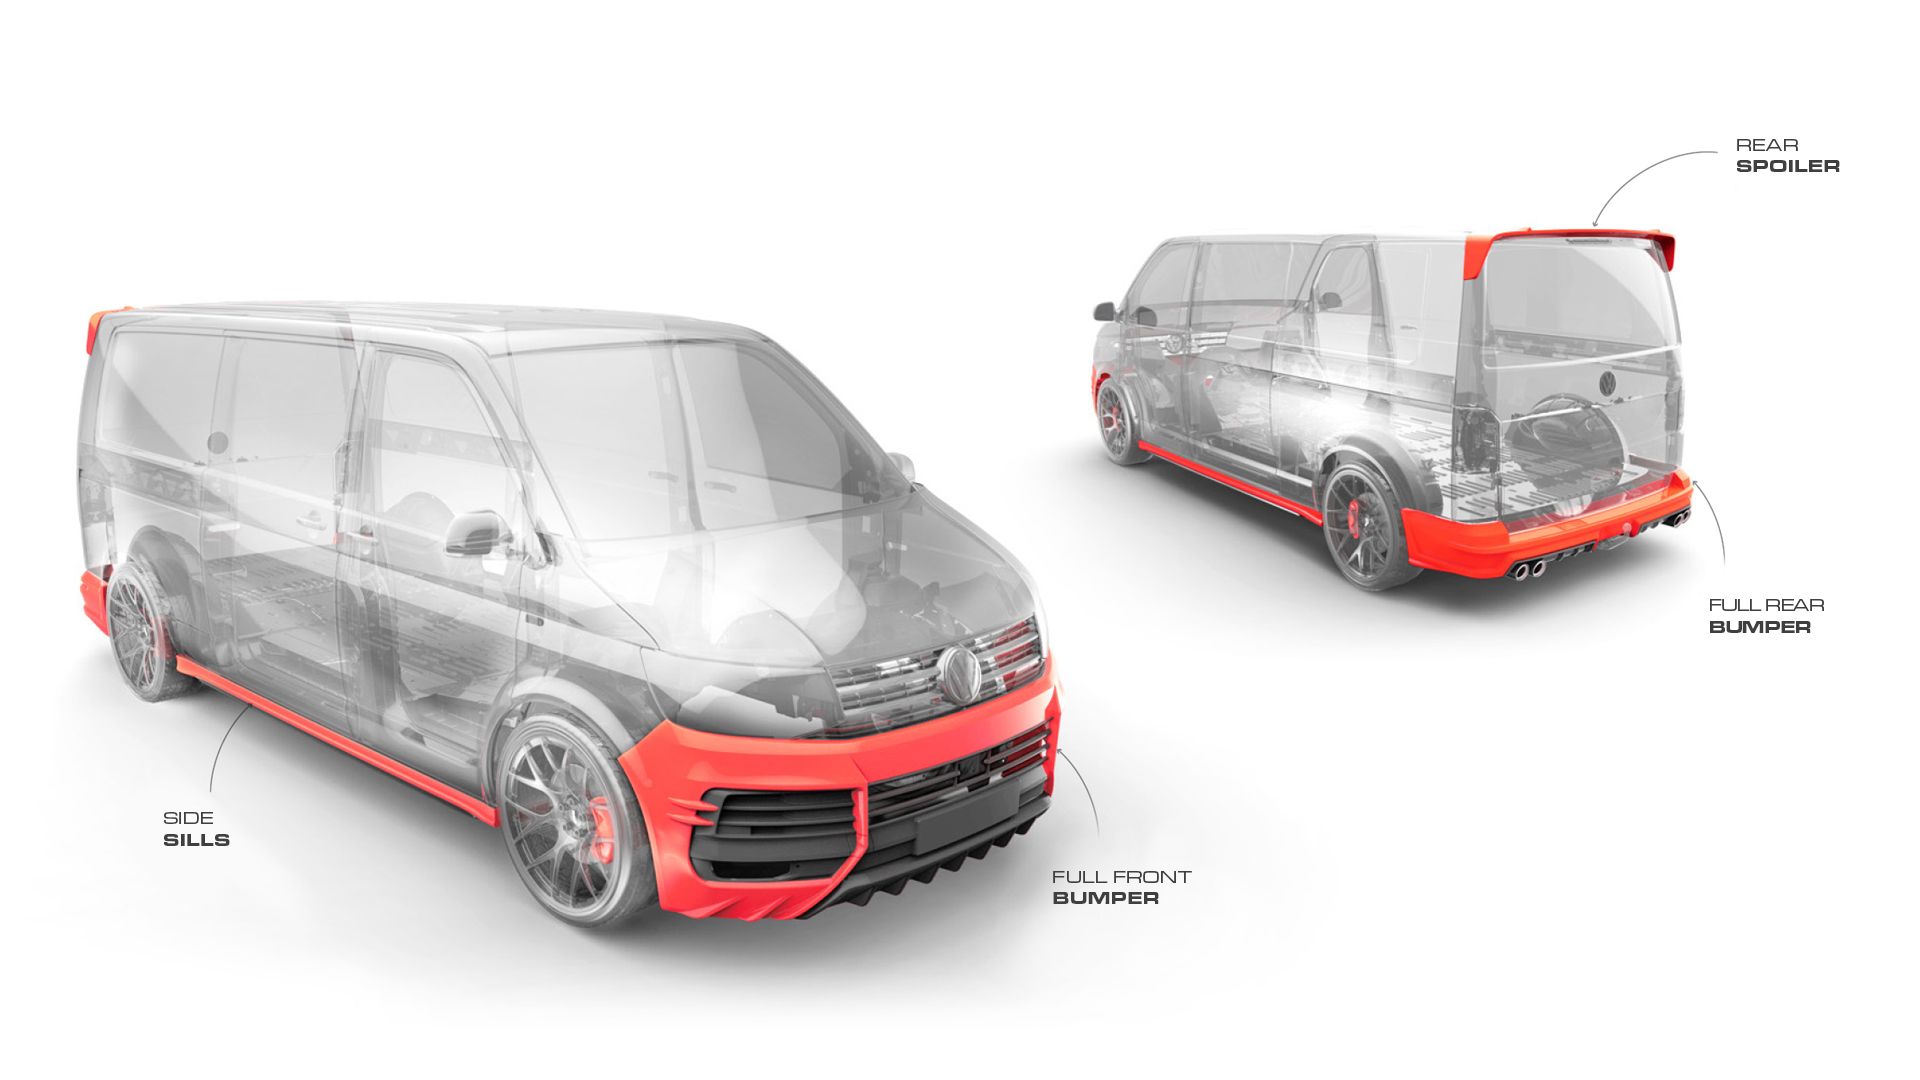 U.S. Designer Creates A Mean-Looking VW T6 For Carlex Design